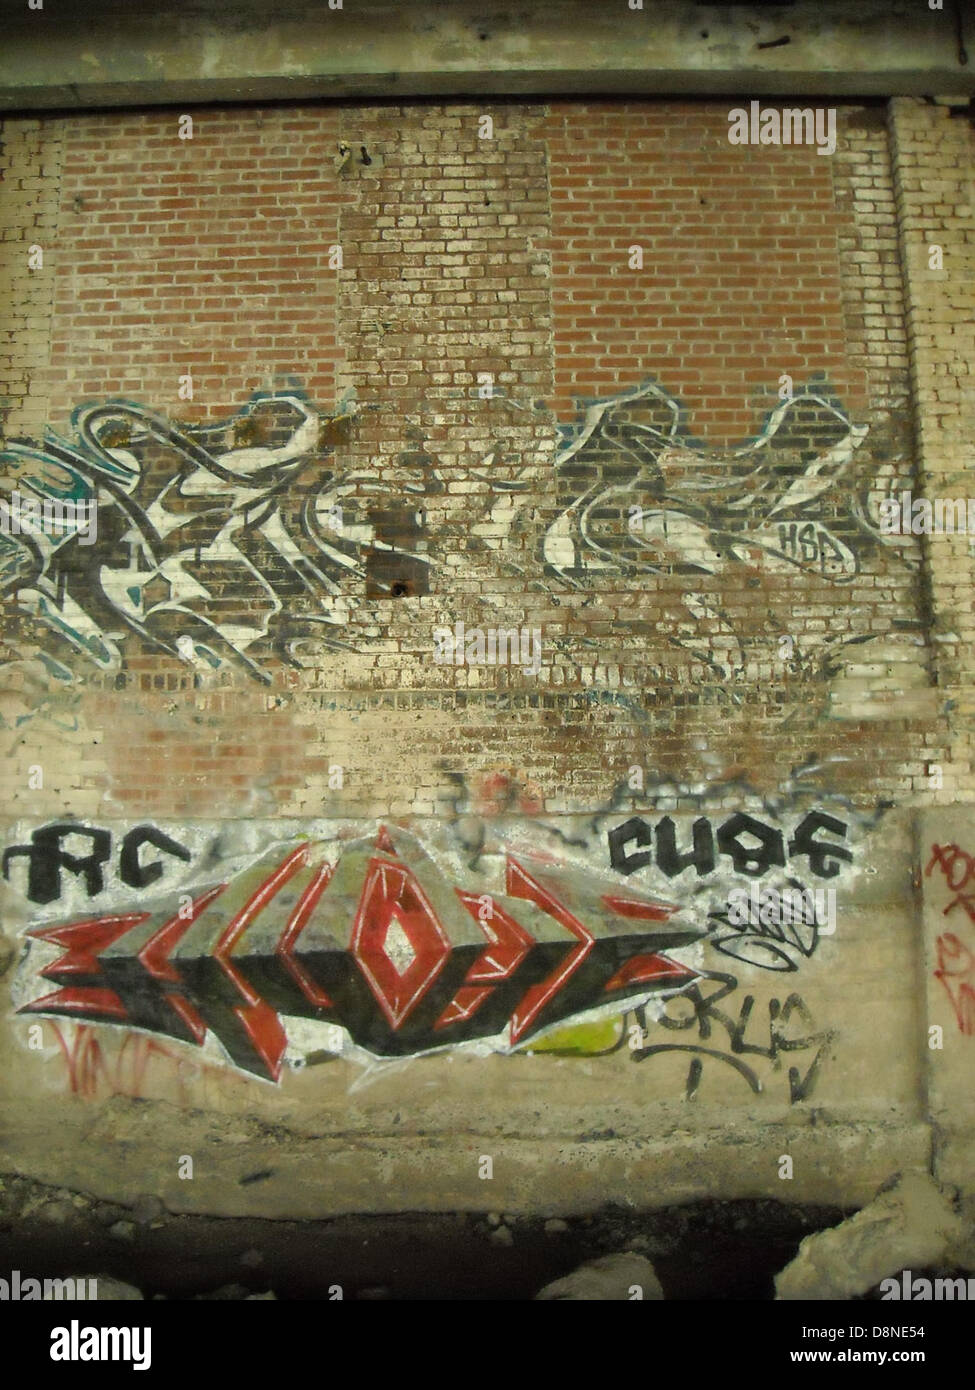 Wall graffiti designs. Stock Photo